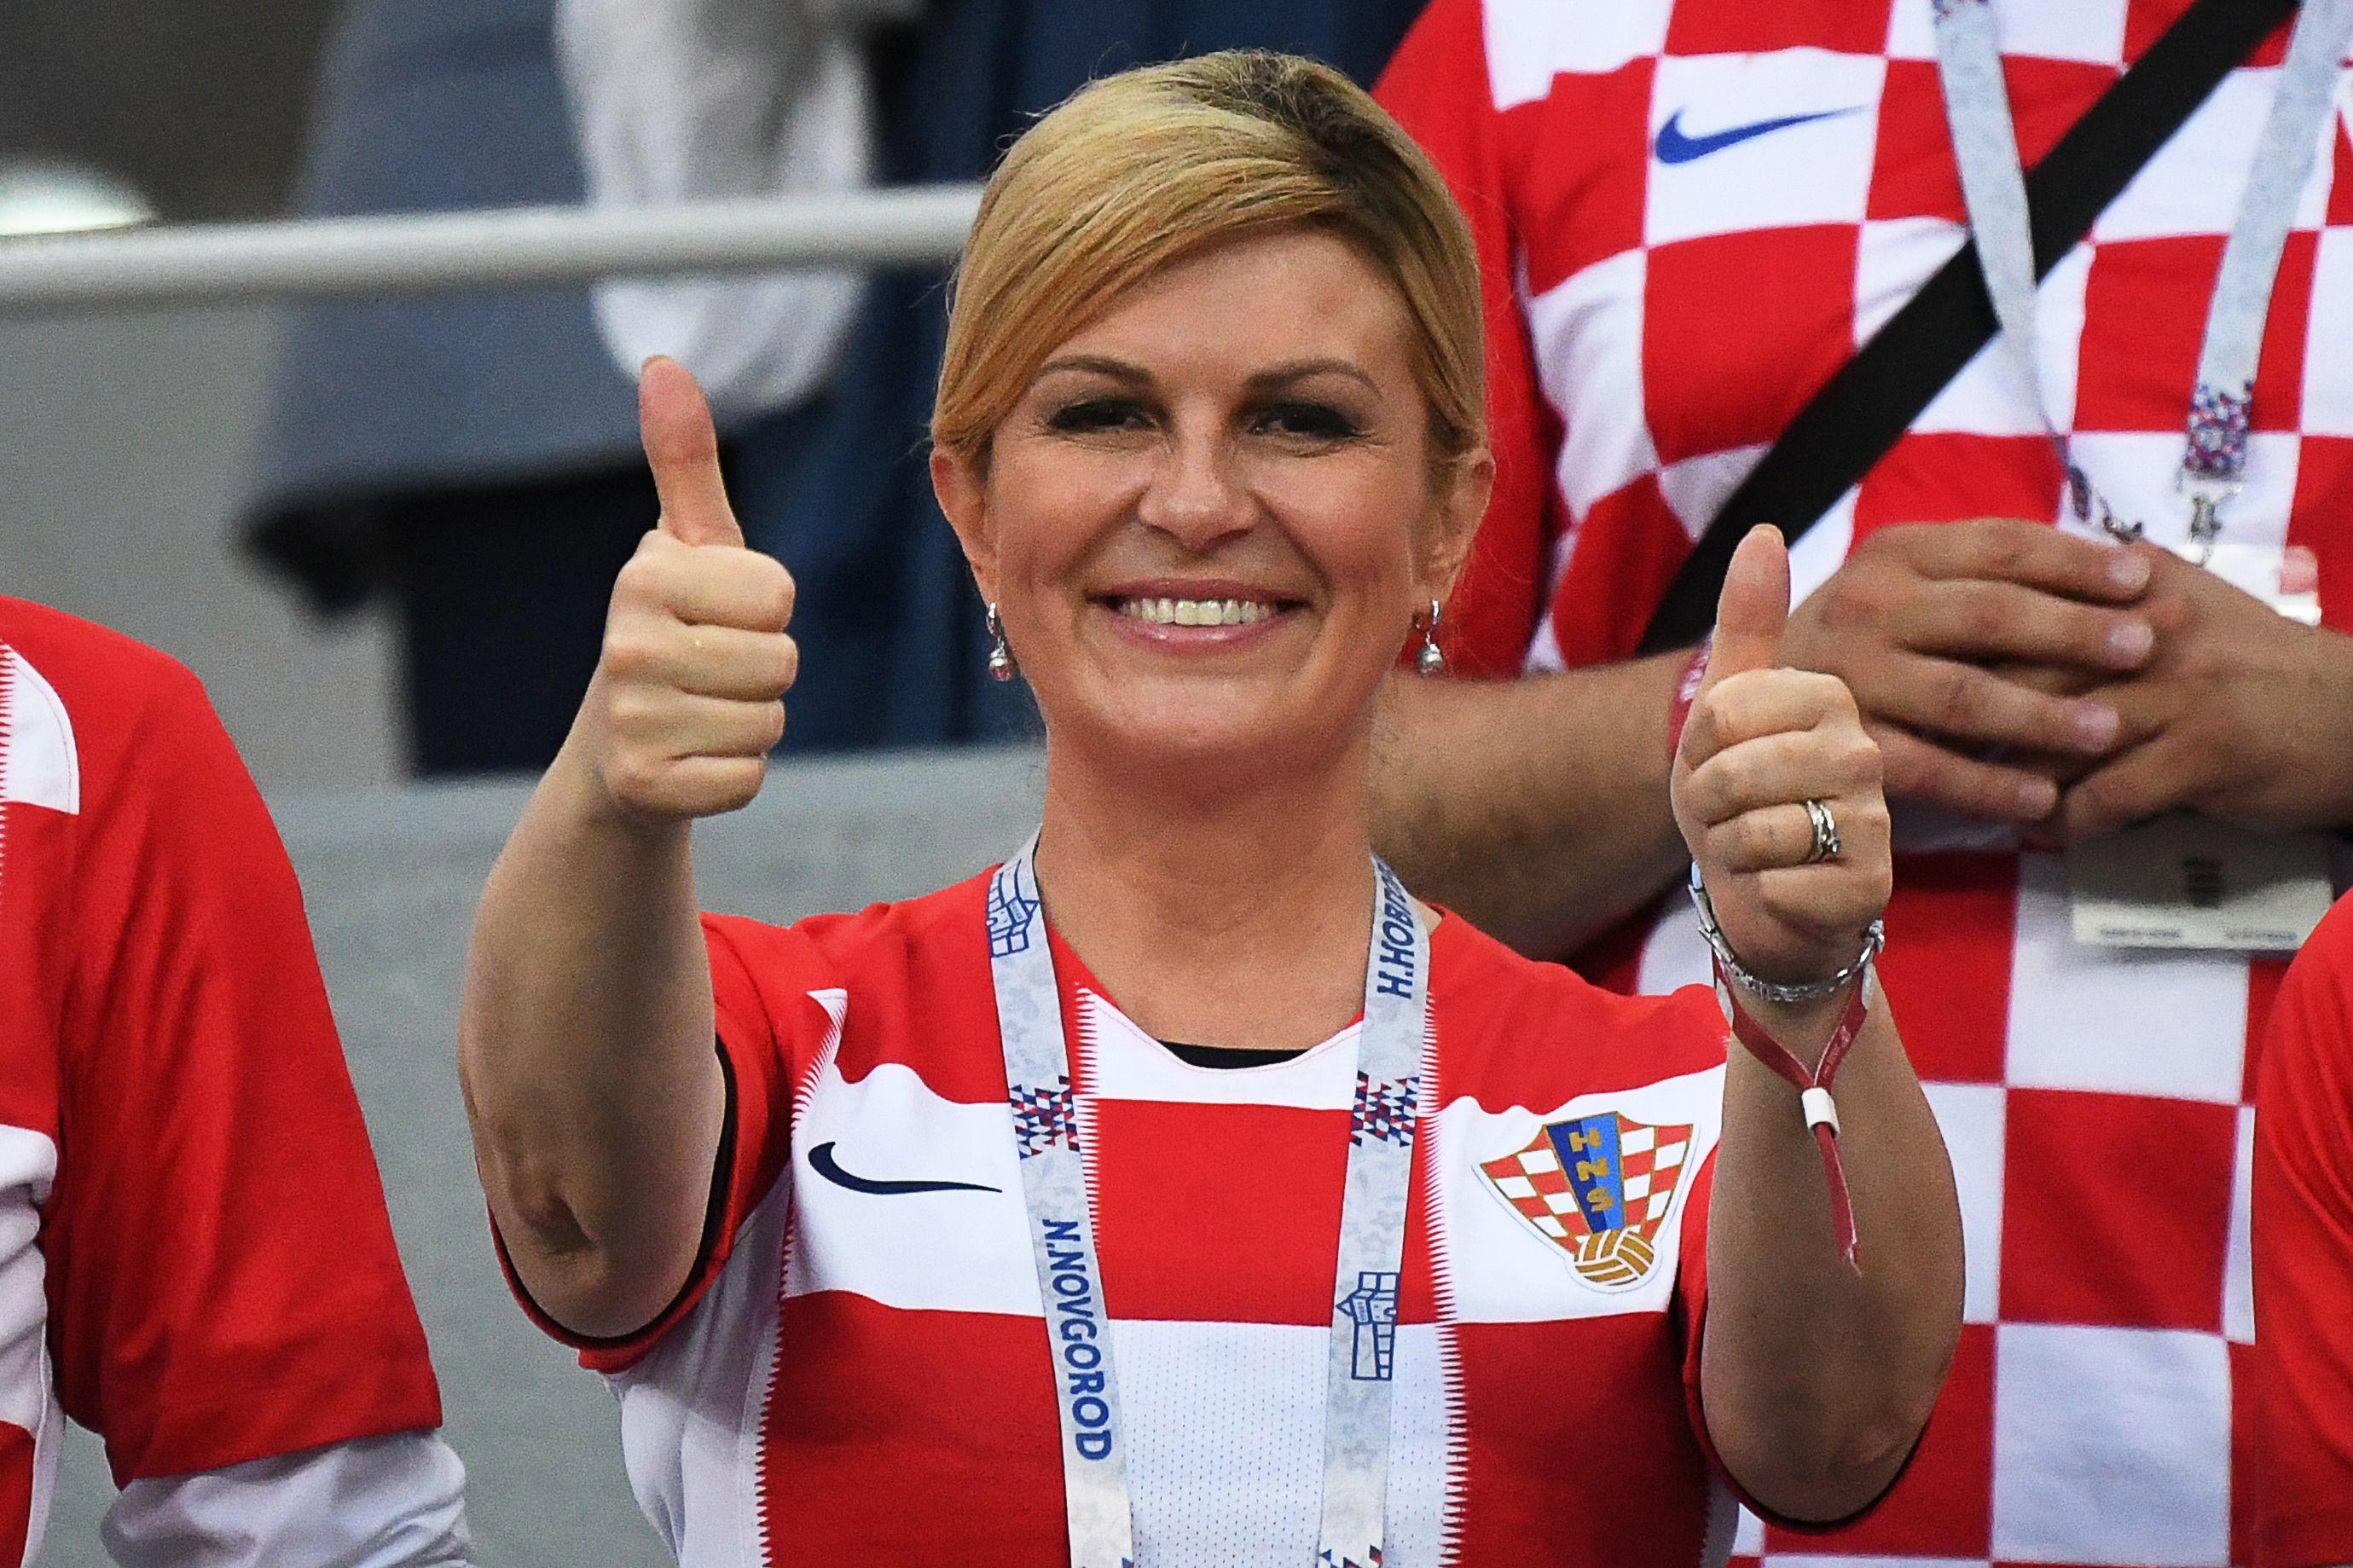 Croatia's President Kolinda Grabar-Kitarovic attends the 2018 World Cup round of 16 football match between Croatia and Denmark at the Nizhny Novgorod Stadium, Nizhny Novgorod Russia, July 1, 2018.